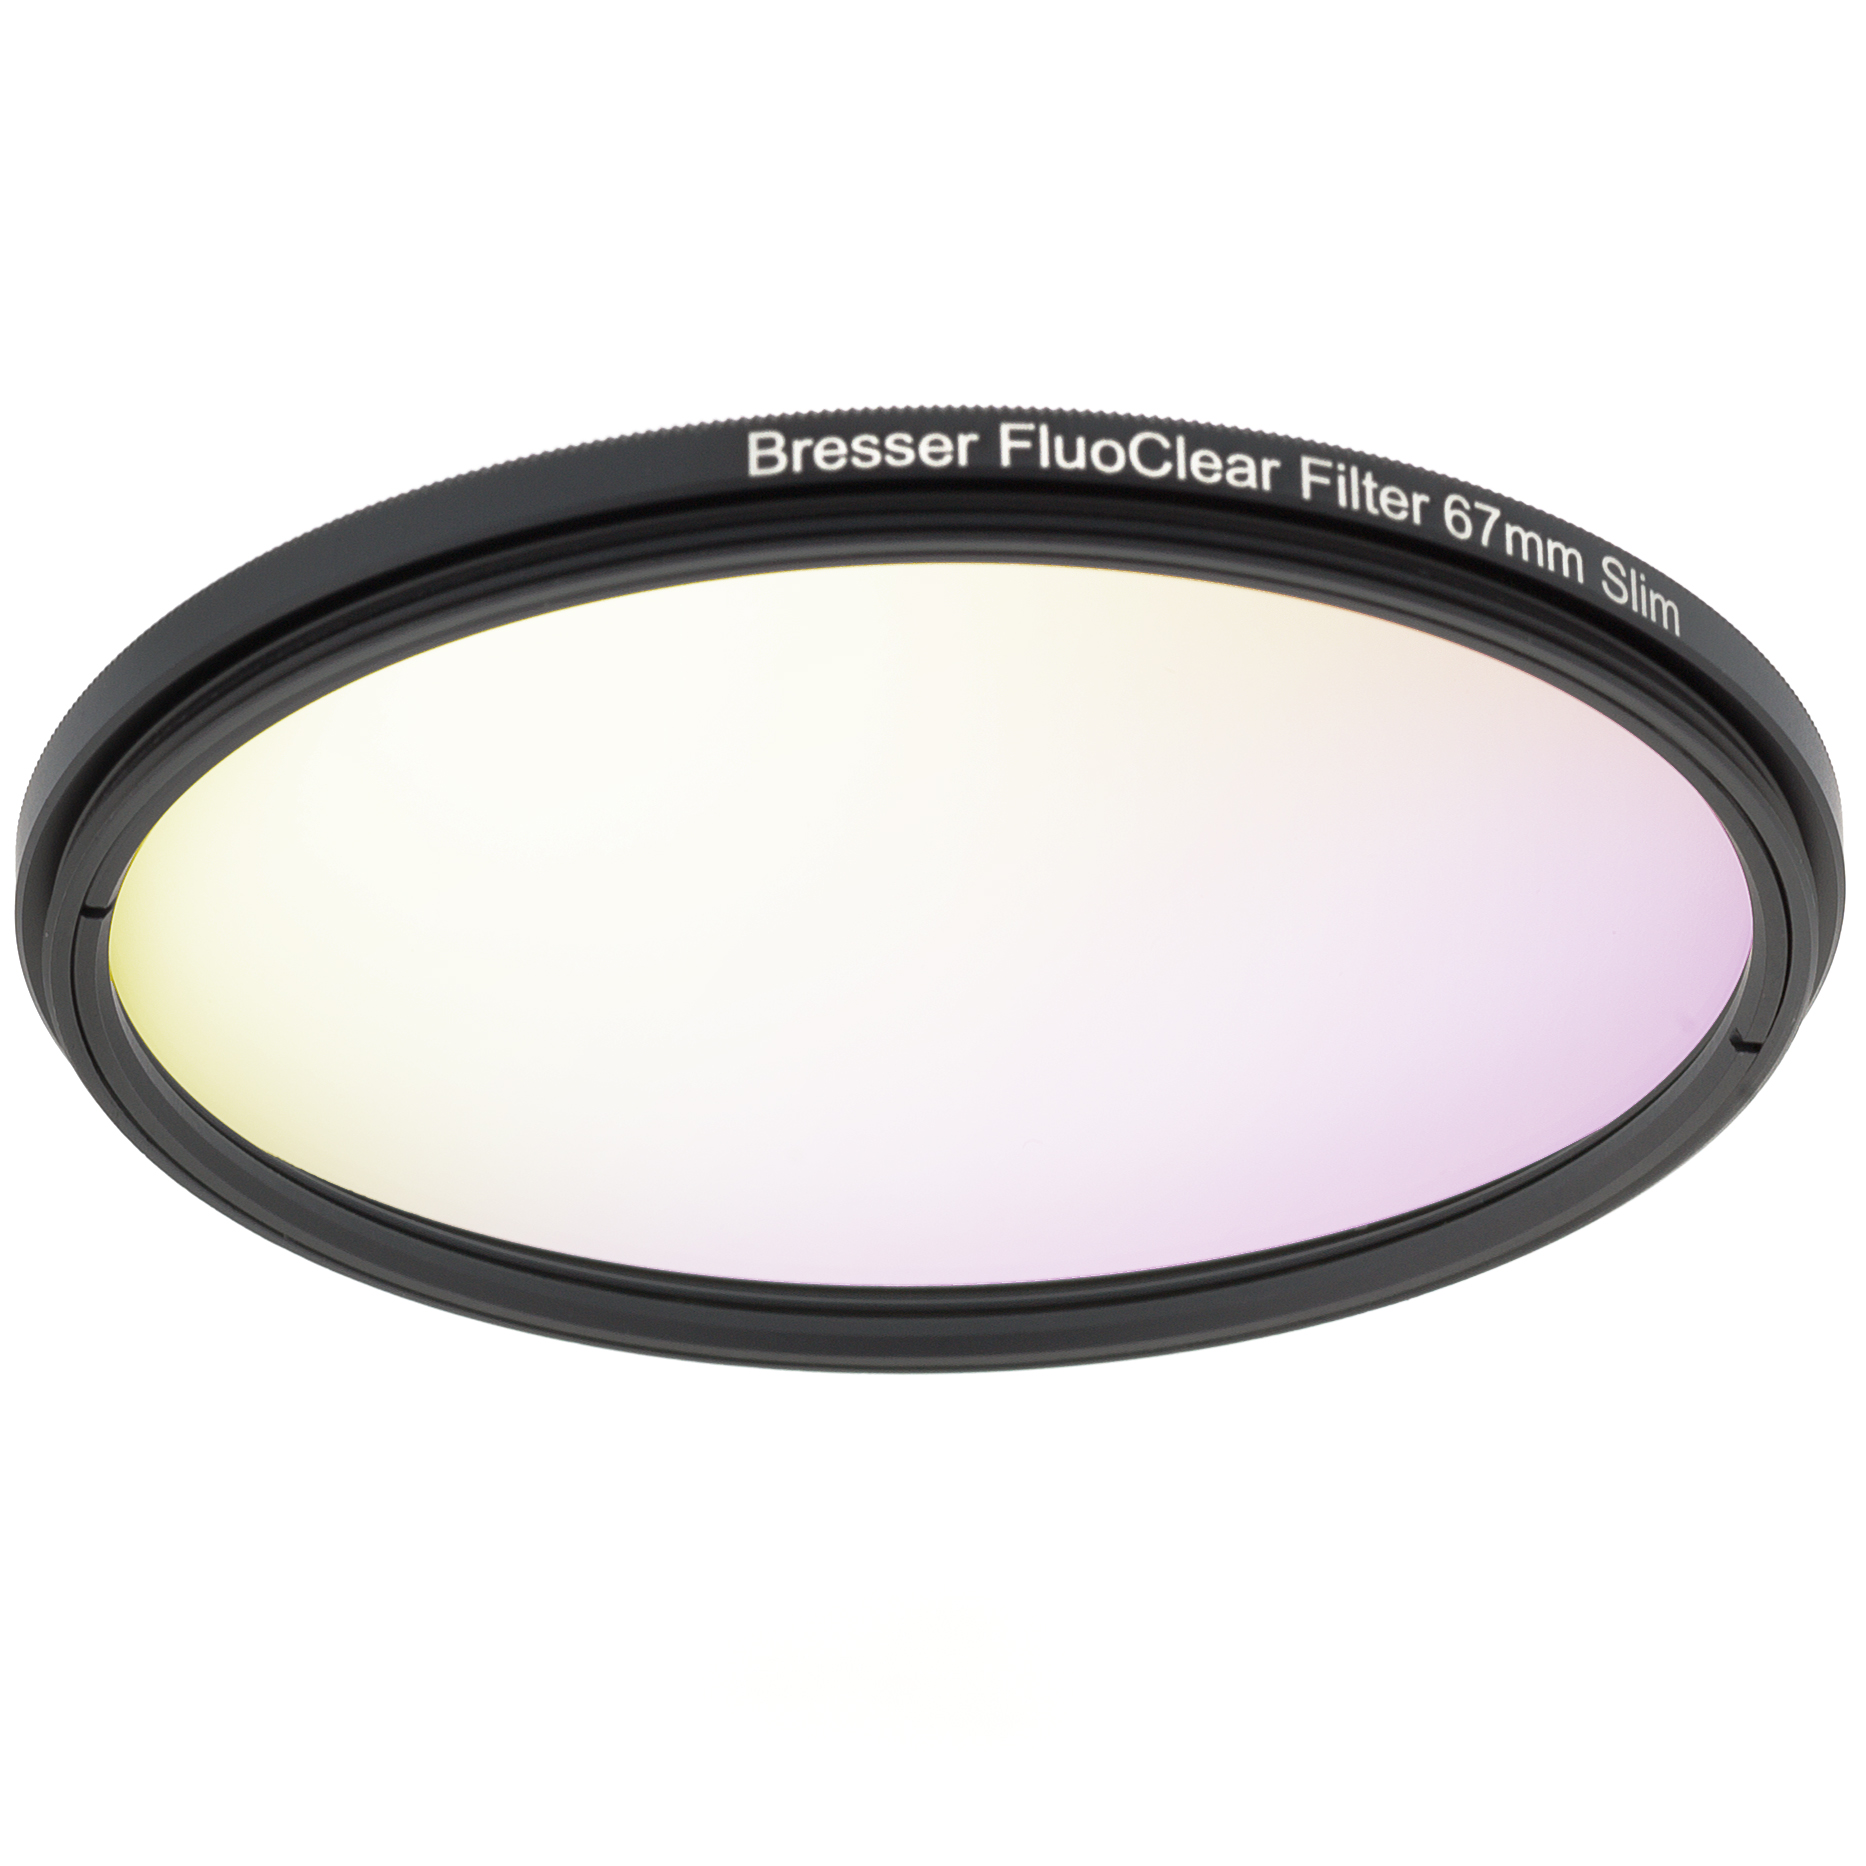 BRESSER FluoClear filtre pour fluorescence 67 mm Slim